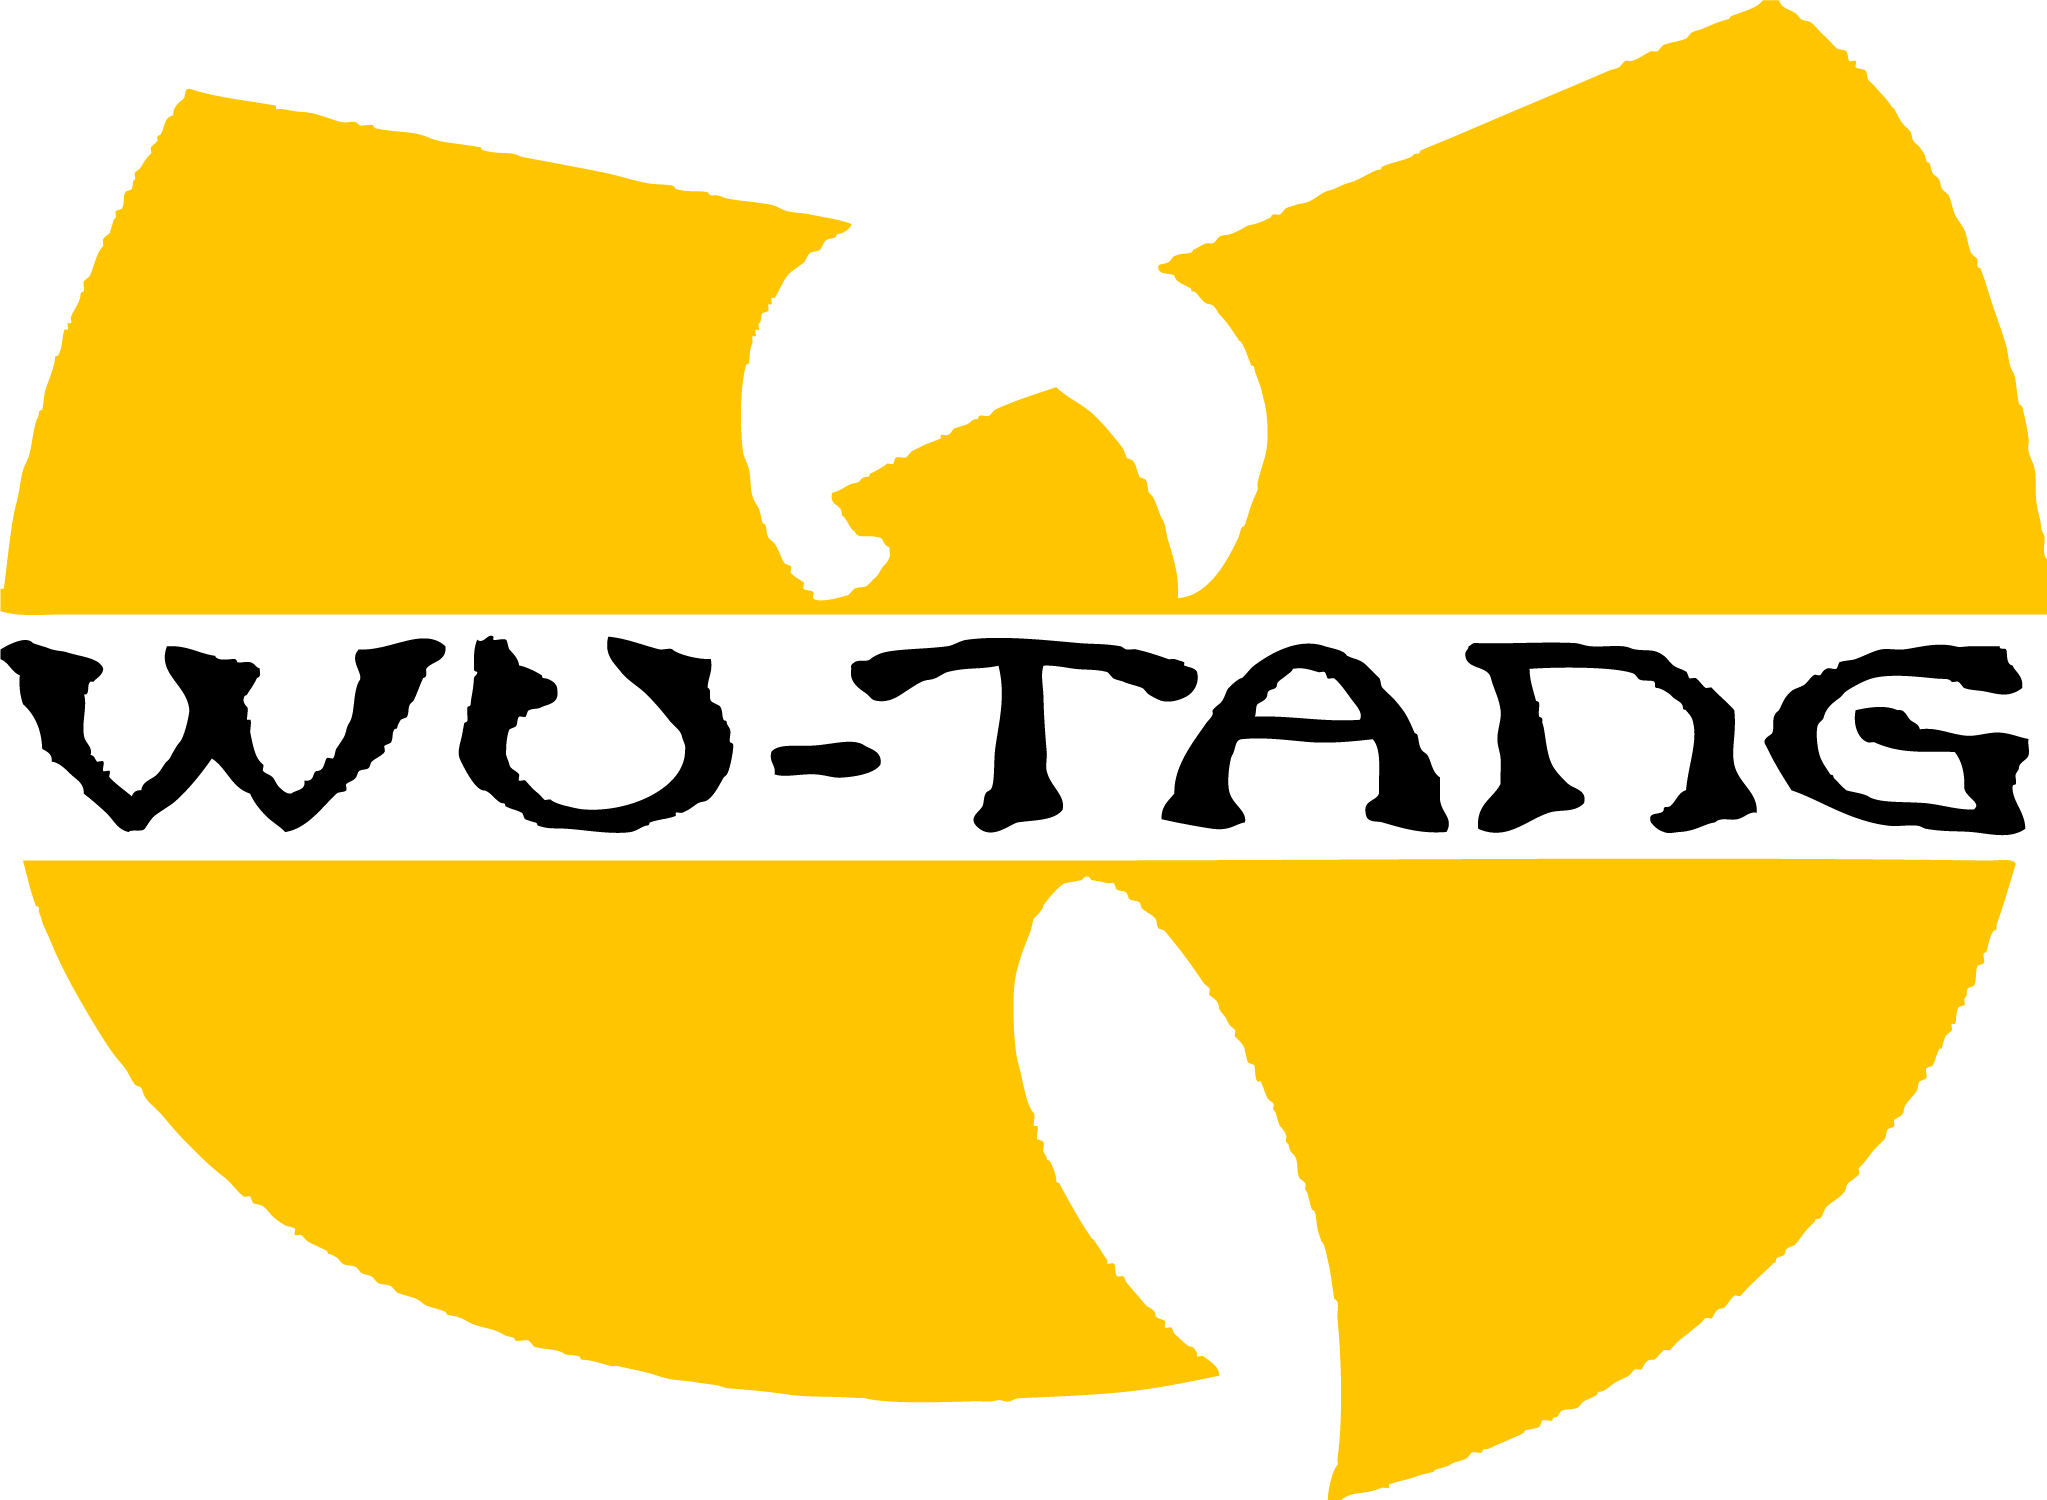 The Wu-Tang Clan Logo - Wu Tang Clan PNG Transparent Wu Tang Clan.PNG Images. | PlusPNG